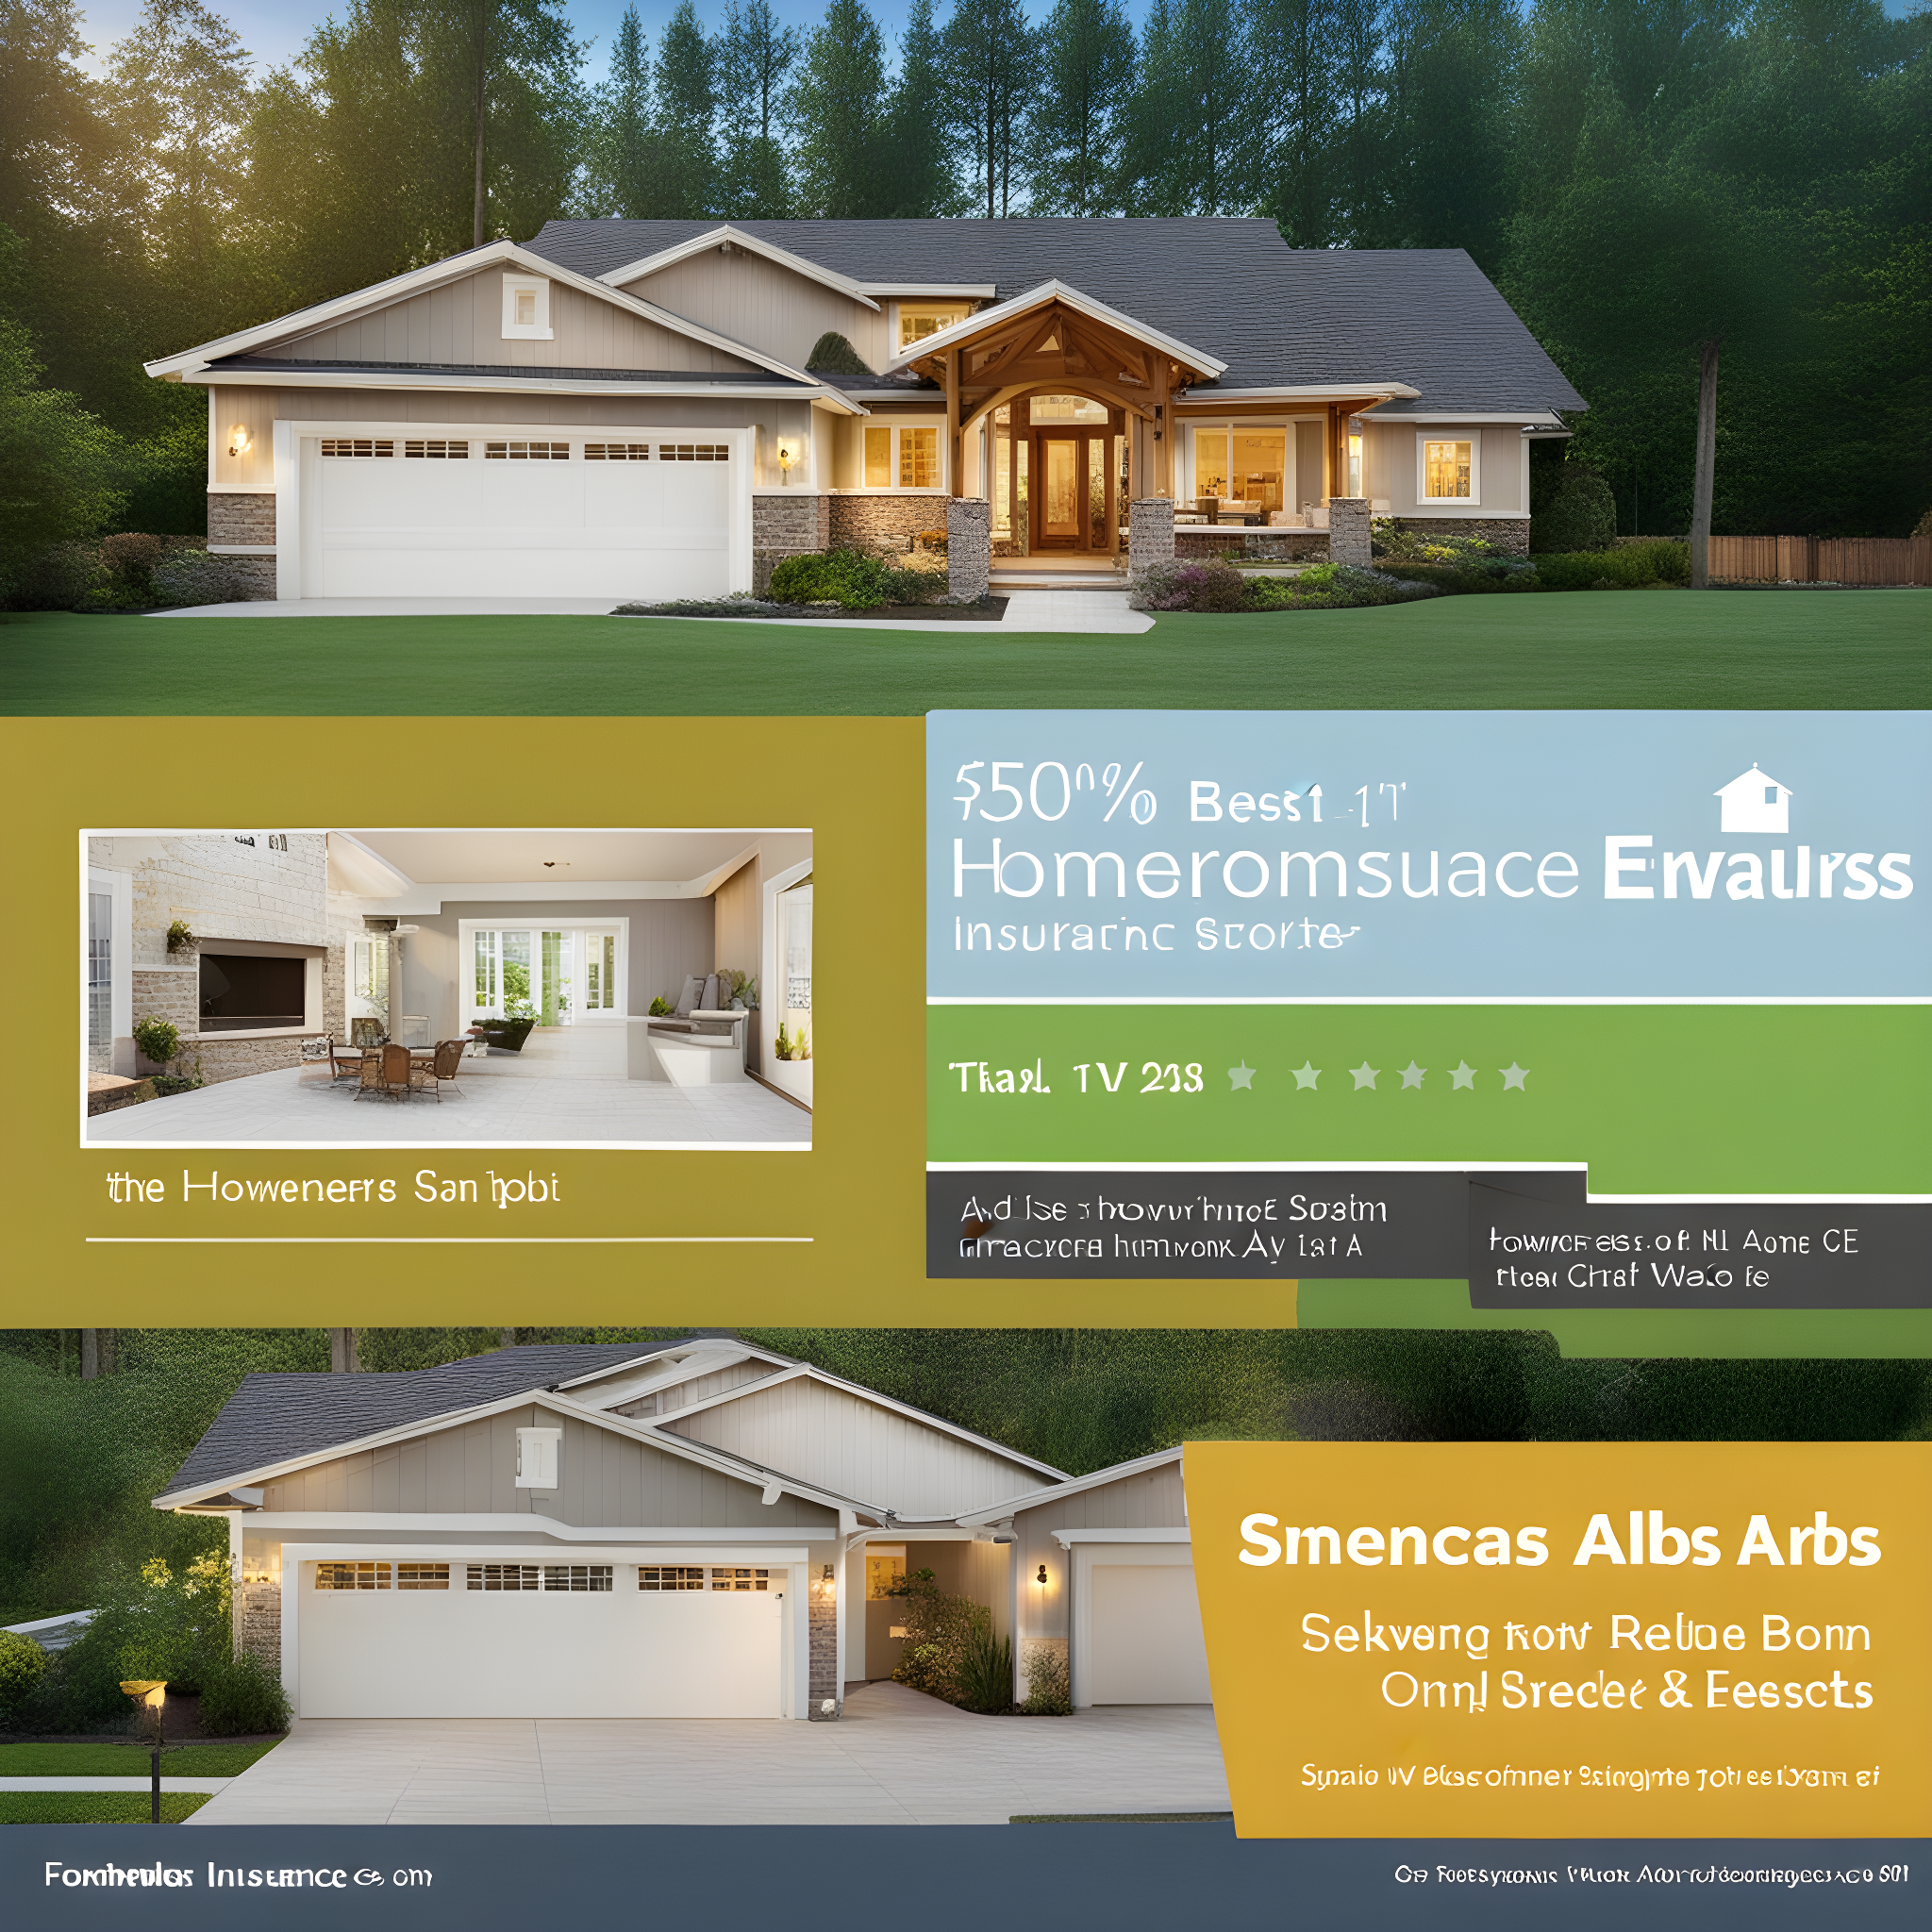 Best Homeowners Insurance Companies